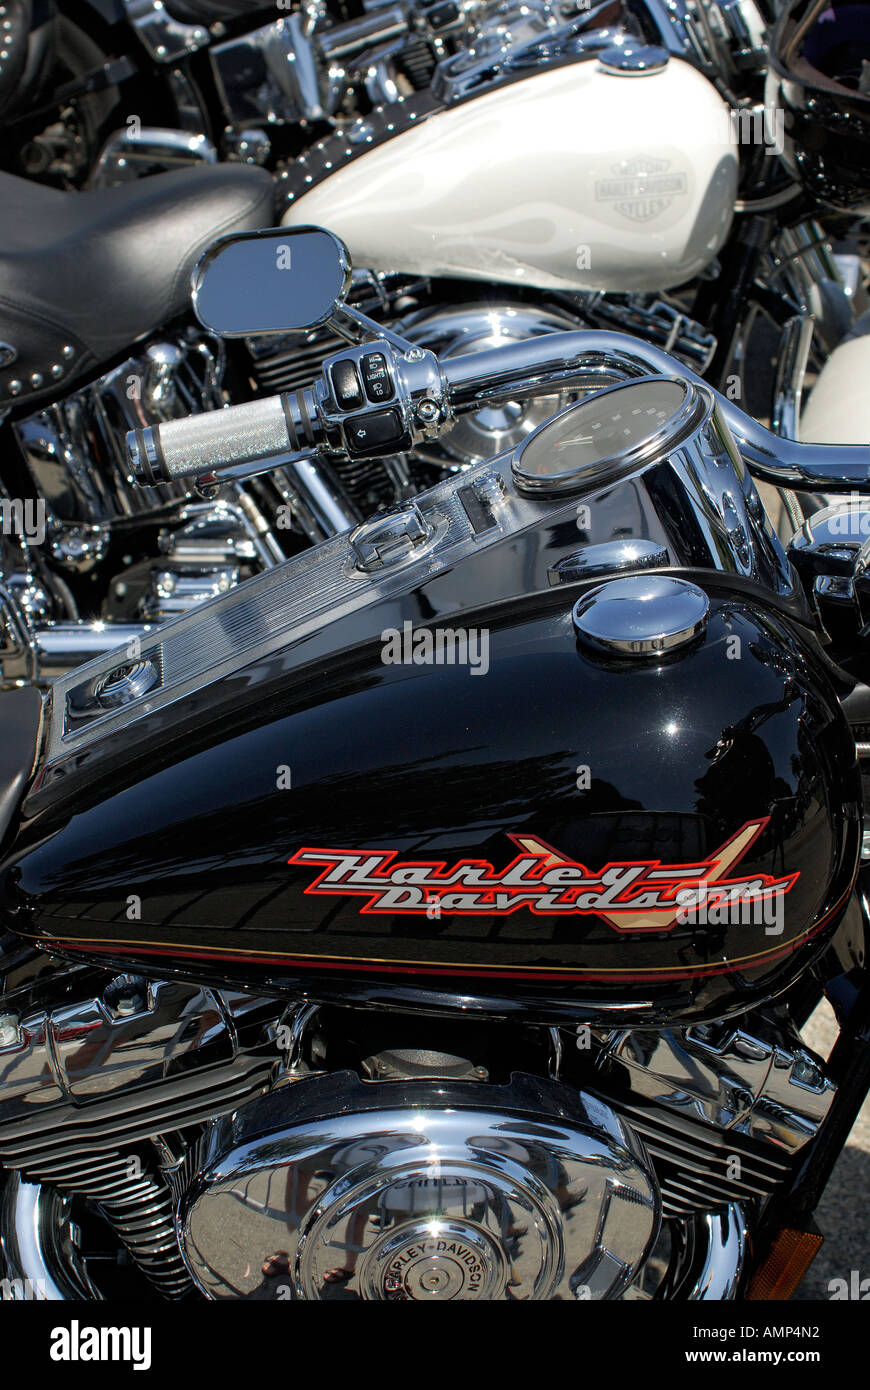 "Harley Davidson Road King' motociclo' Foto Stock